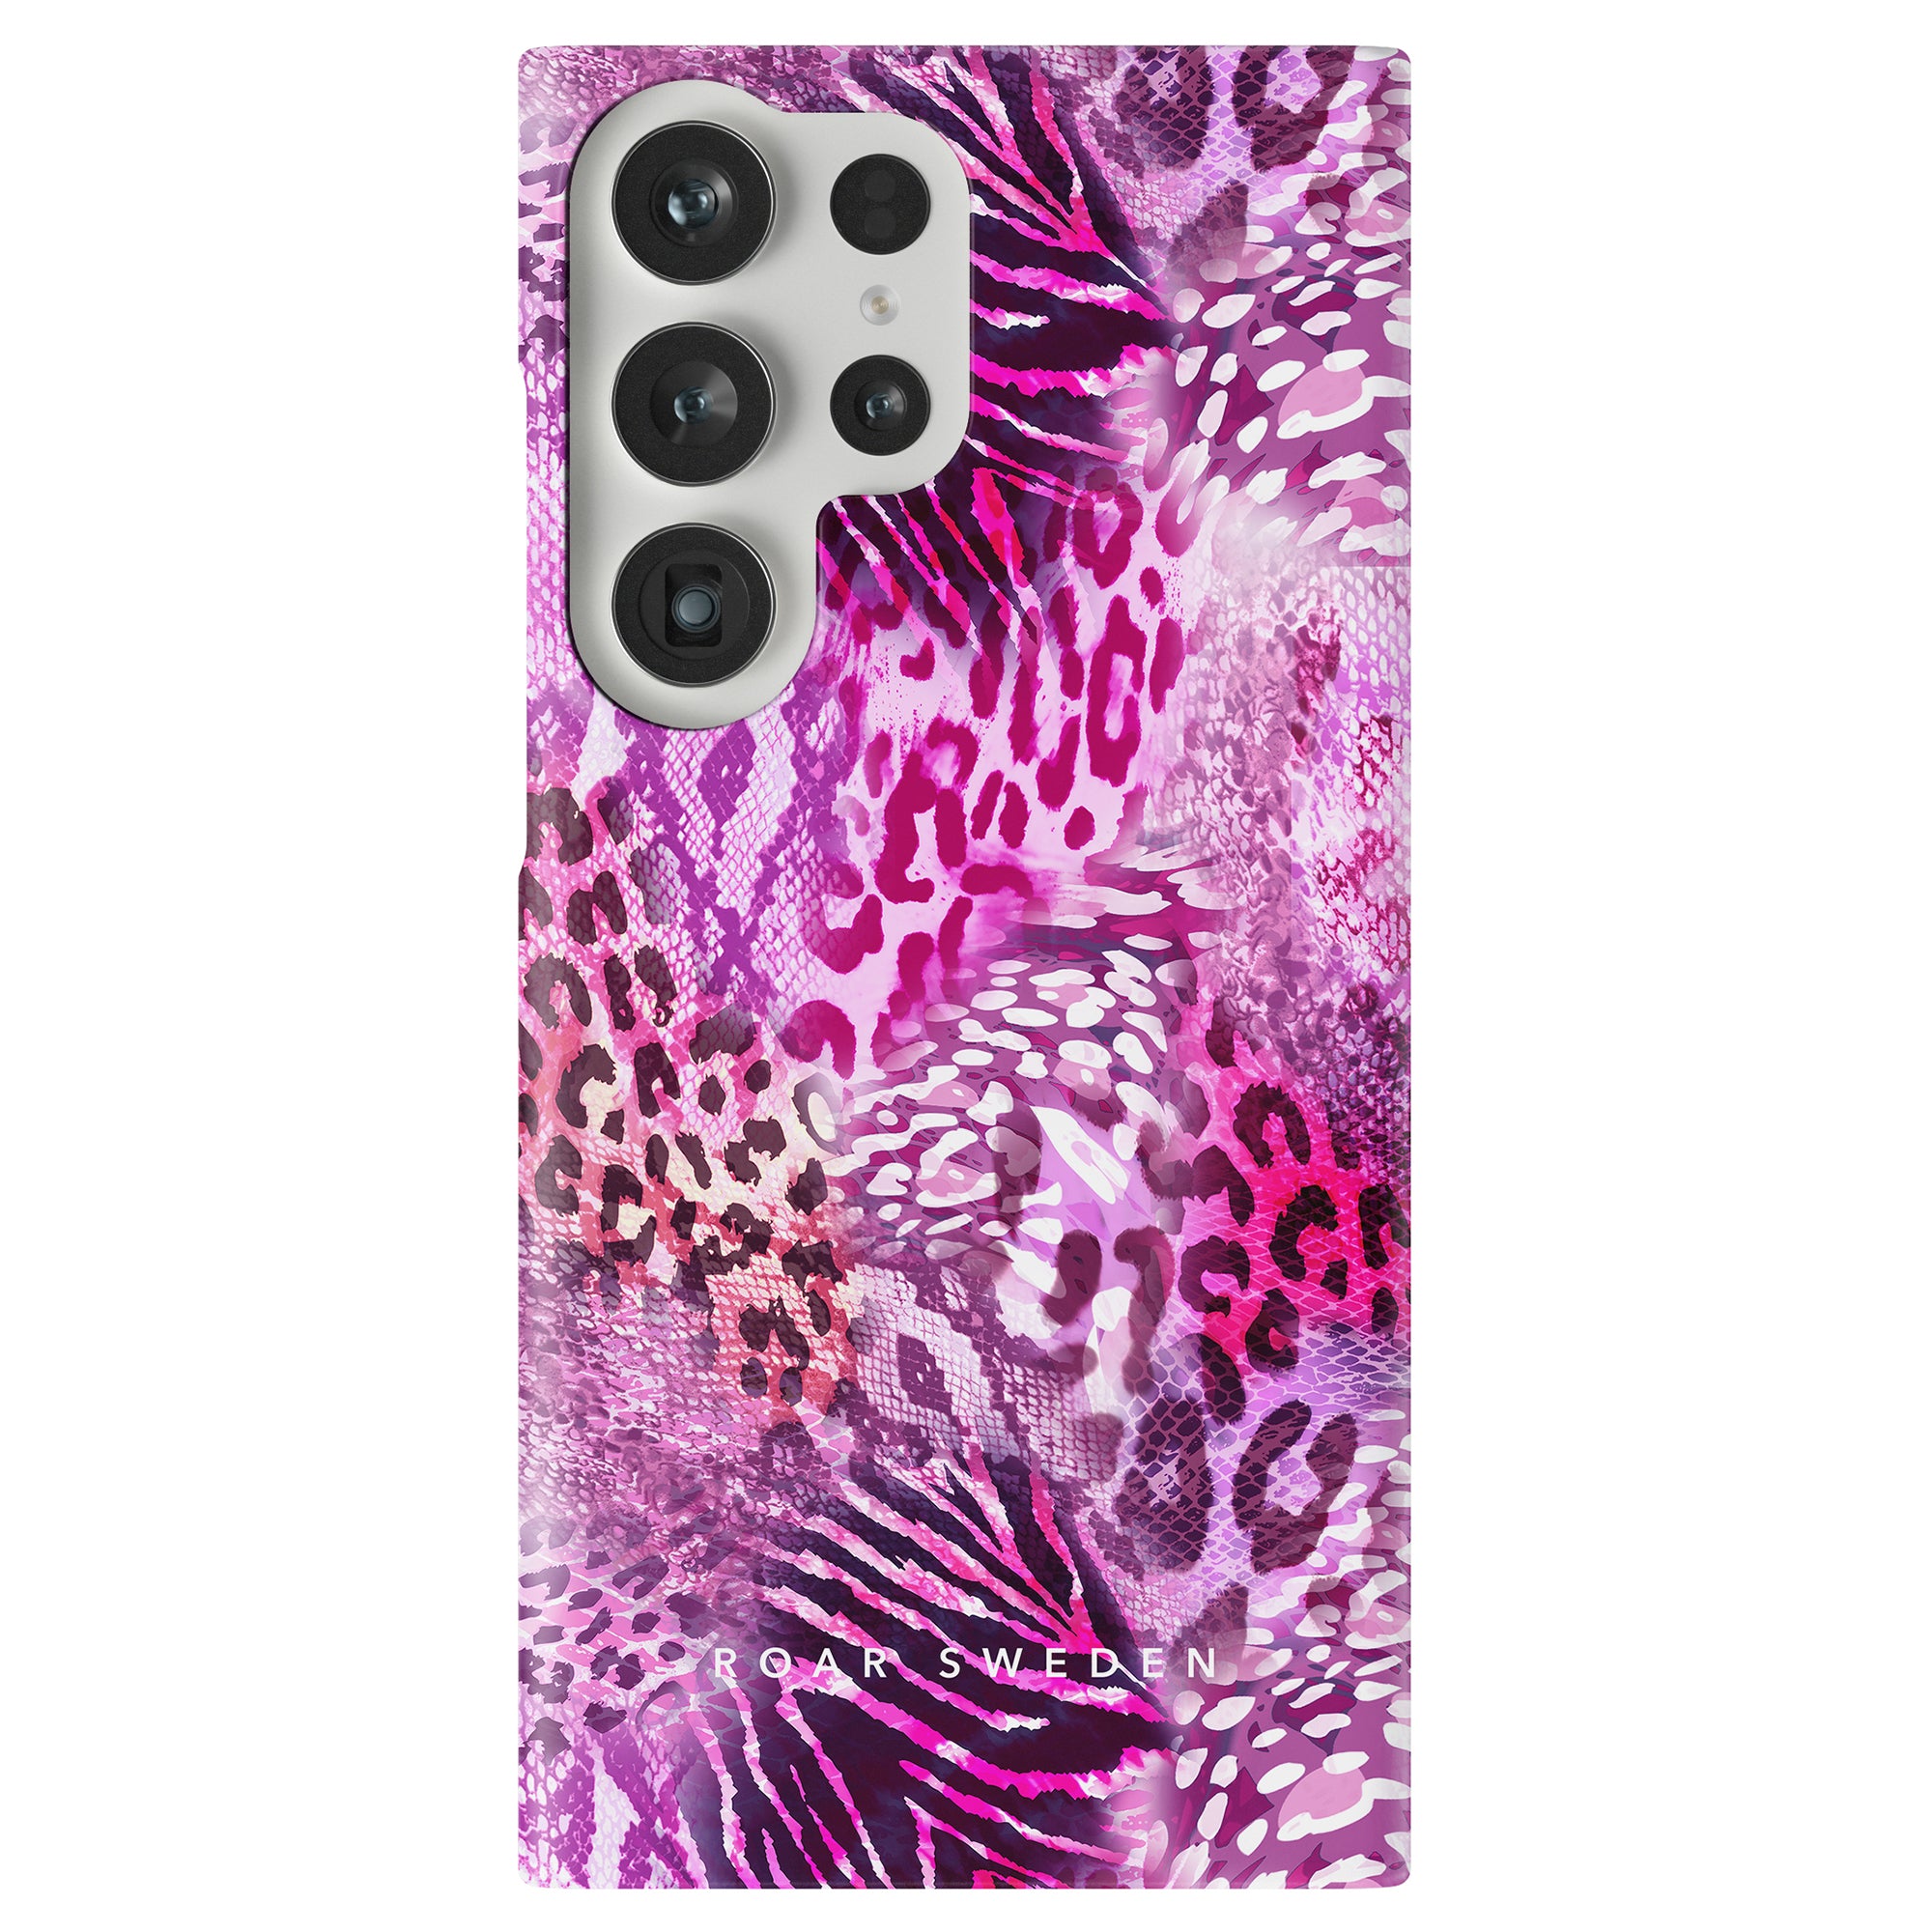 A Swirl Leopard - Slim case with a Swirl Leopard print.